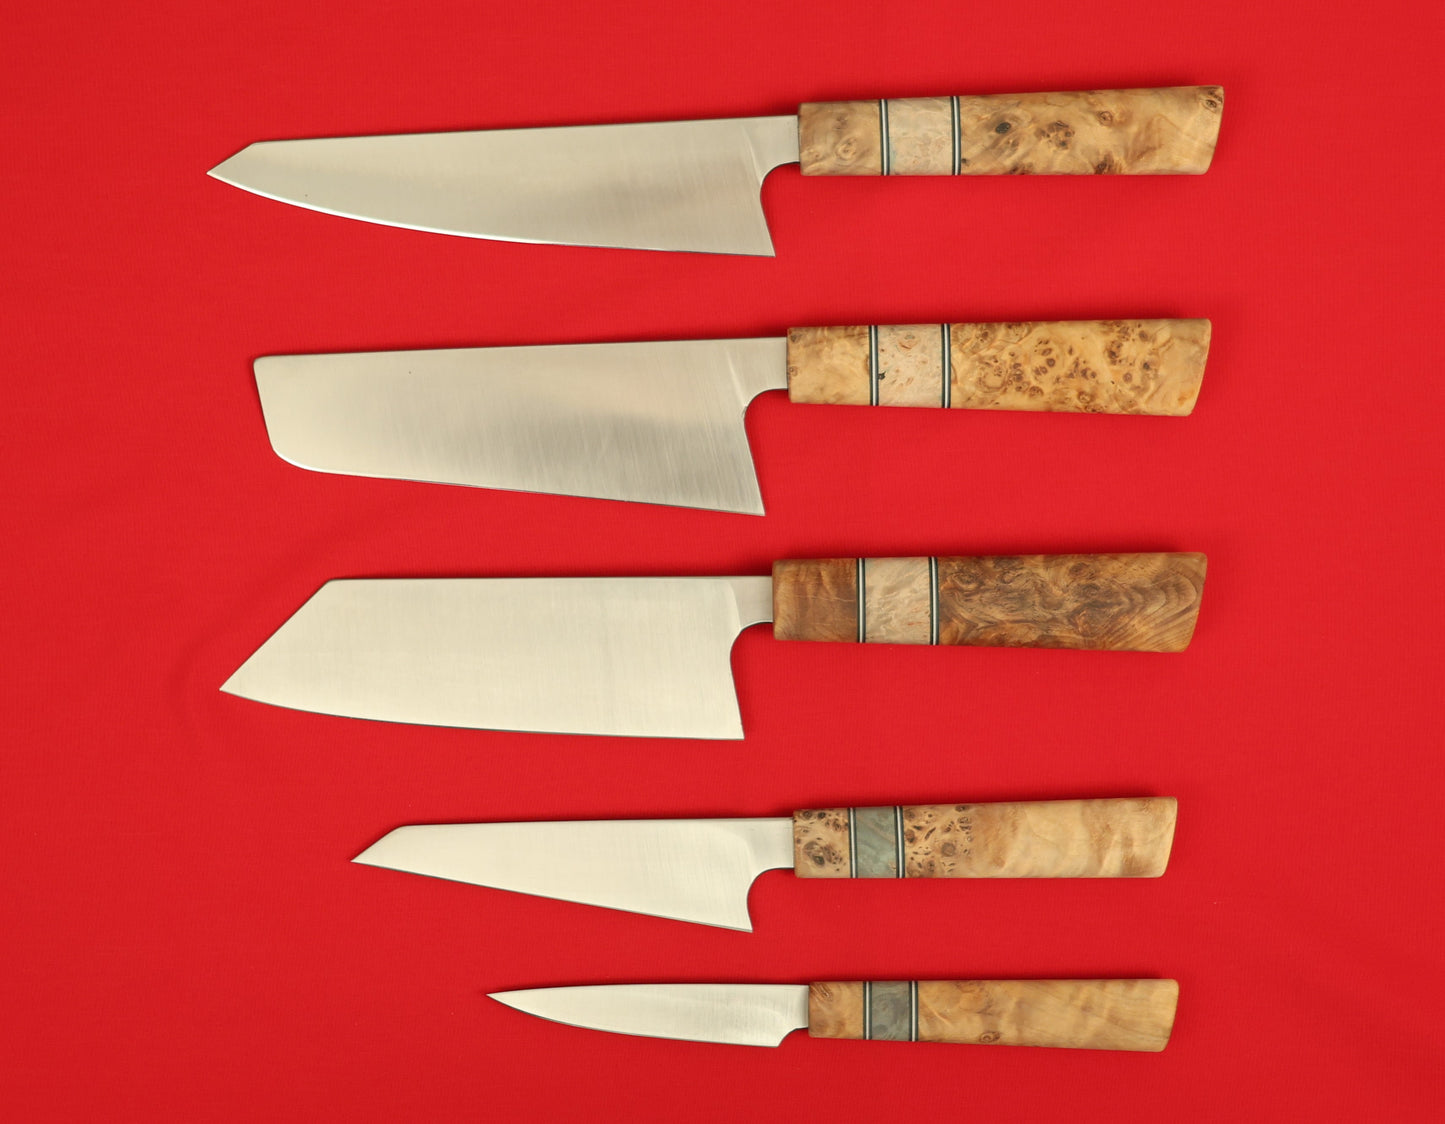 Japanese style kitchen knife set on a red background. Kiritsuke, Nakiri, Bunka, Honesuki and paring knives. 